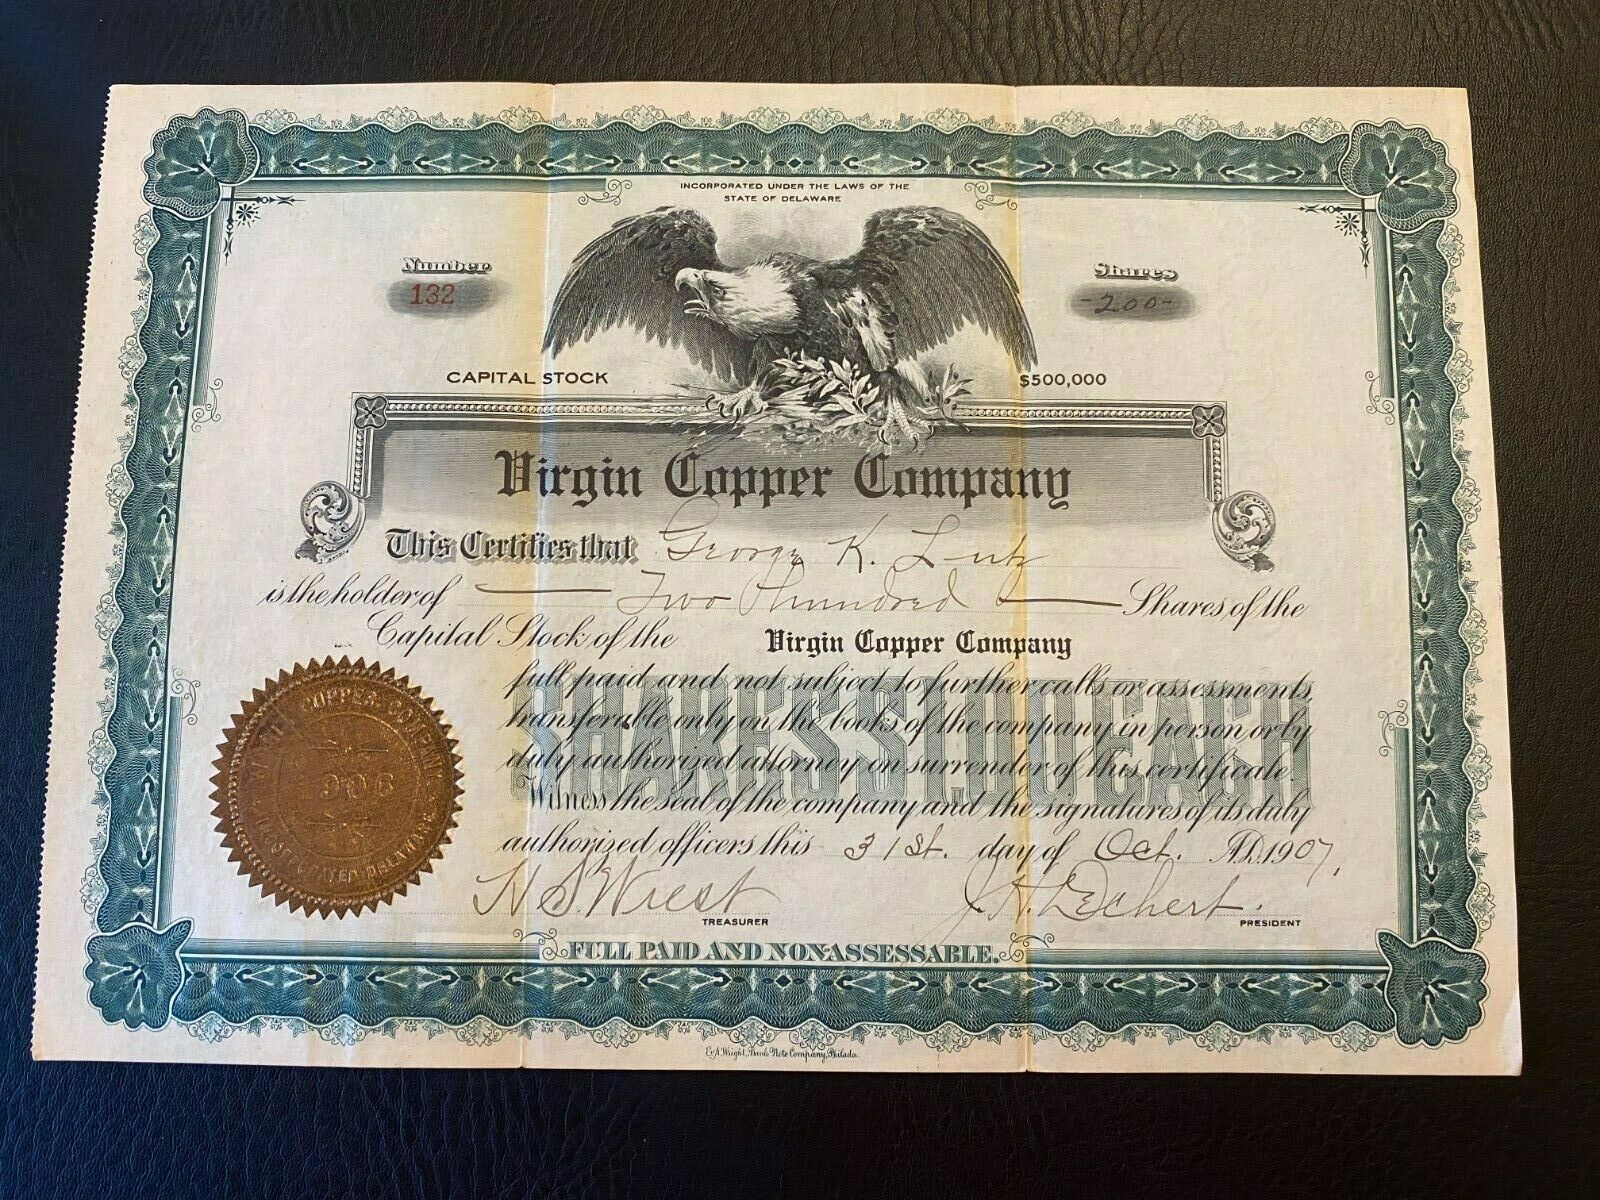 1907 Virgin Copper Company Stock Certificate Blue Ridge Mountains, Pa